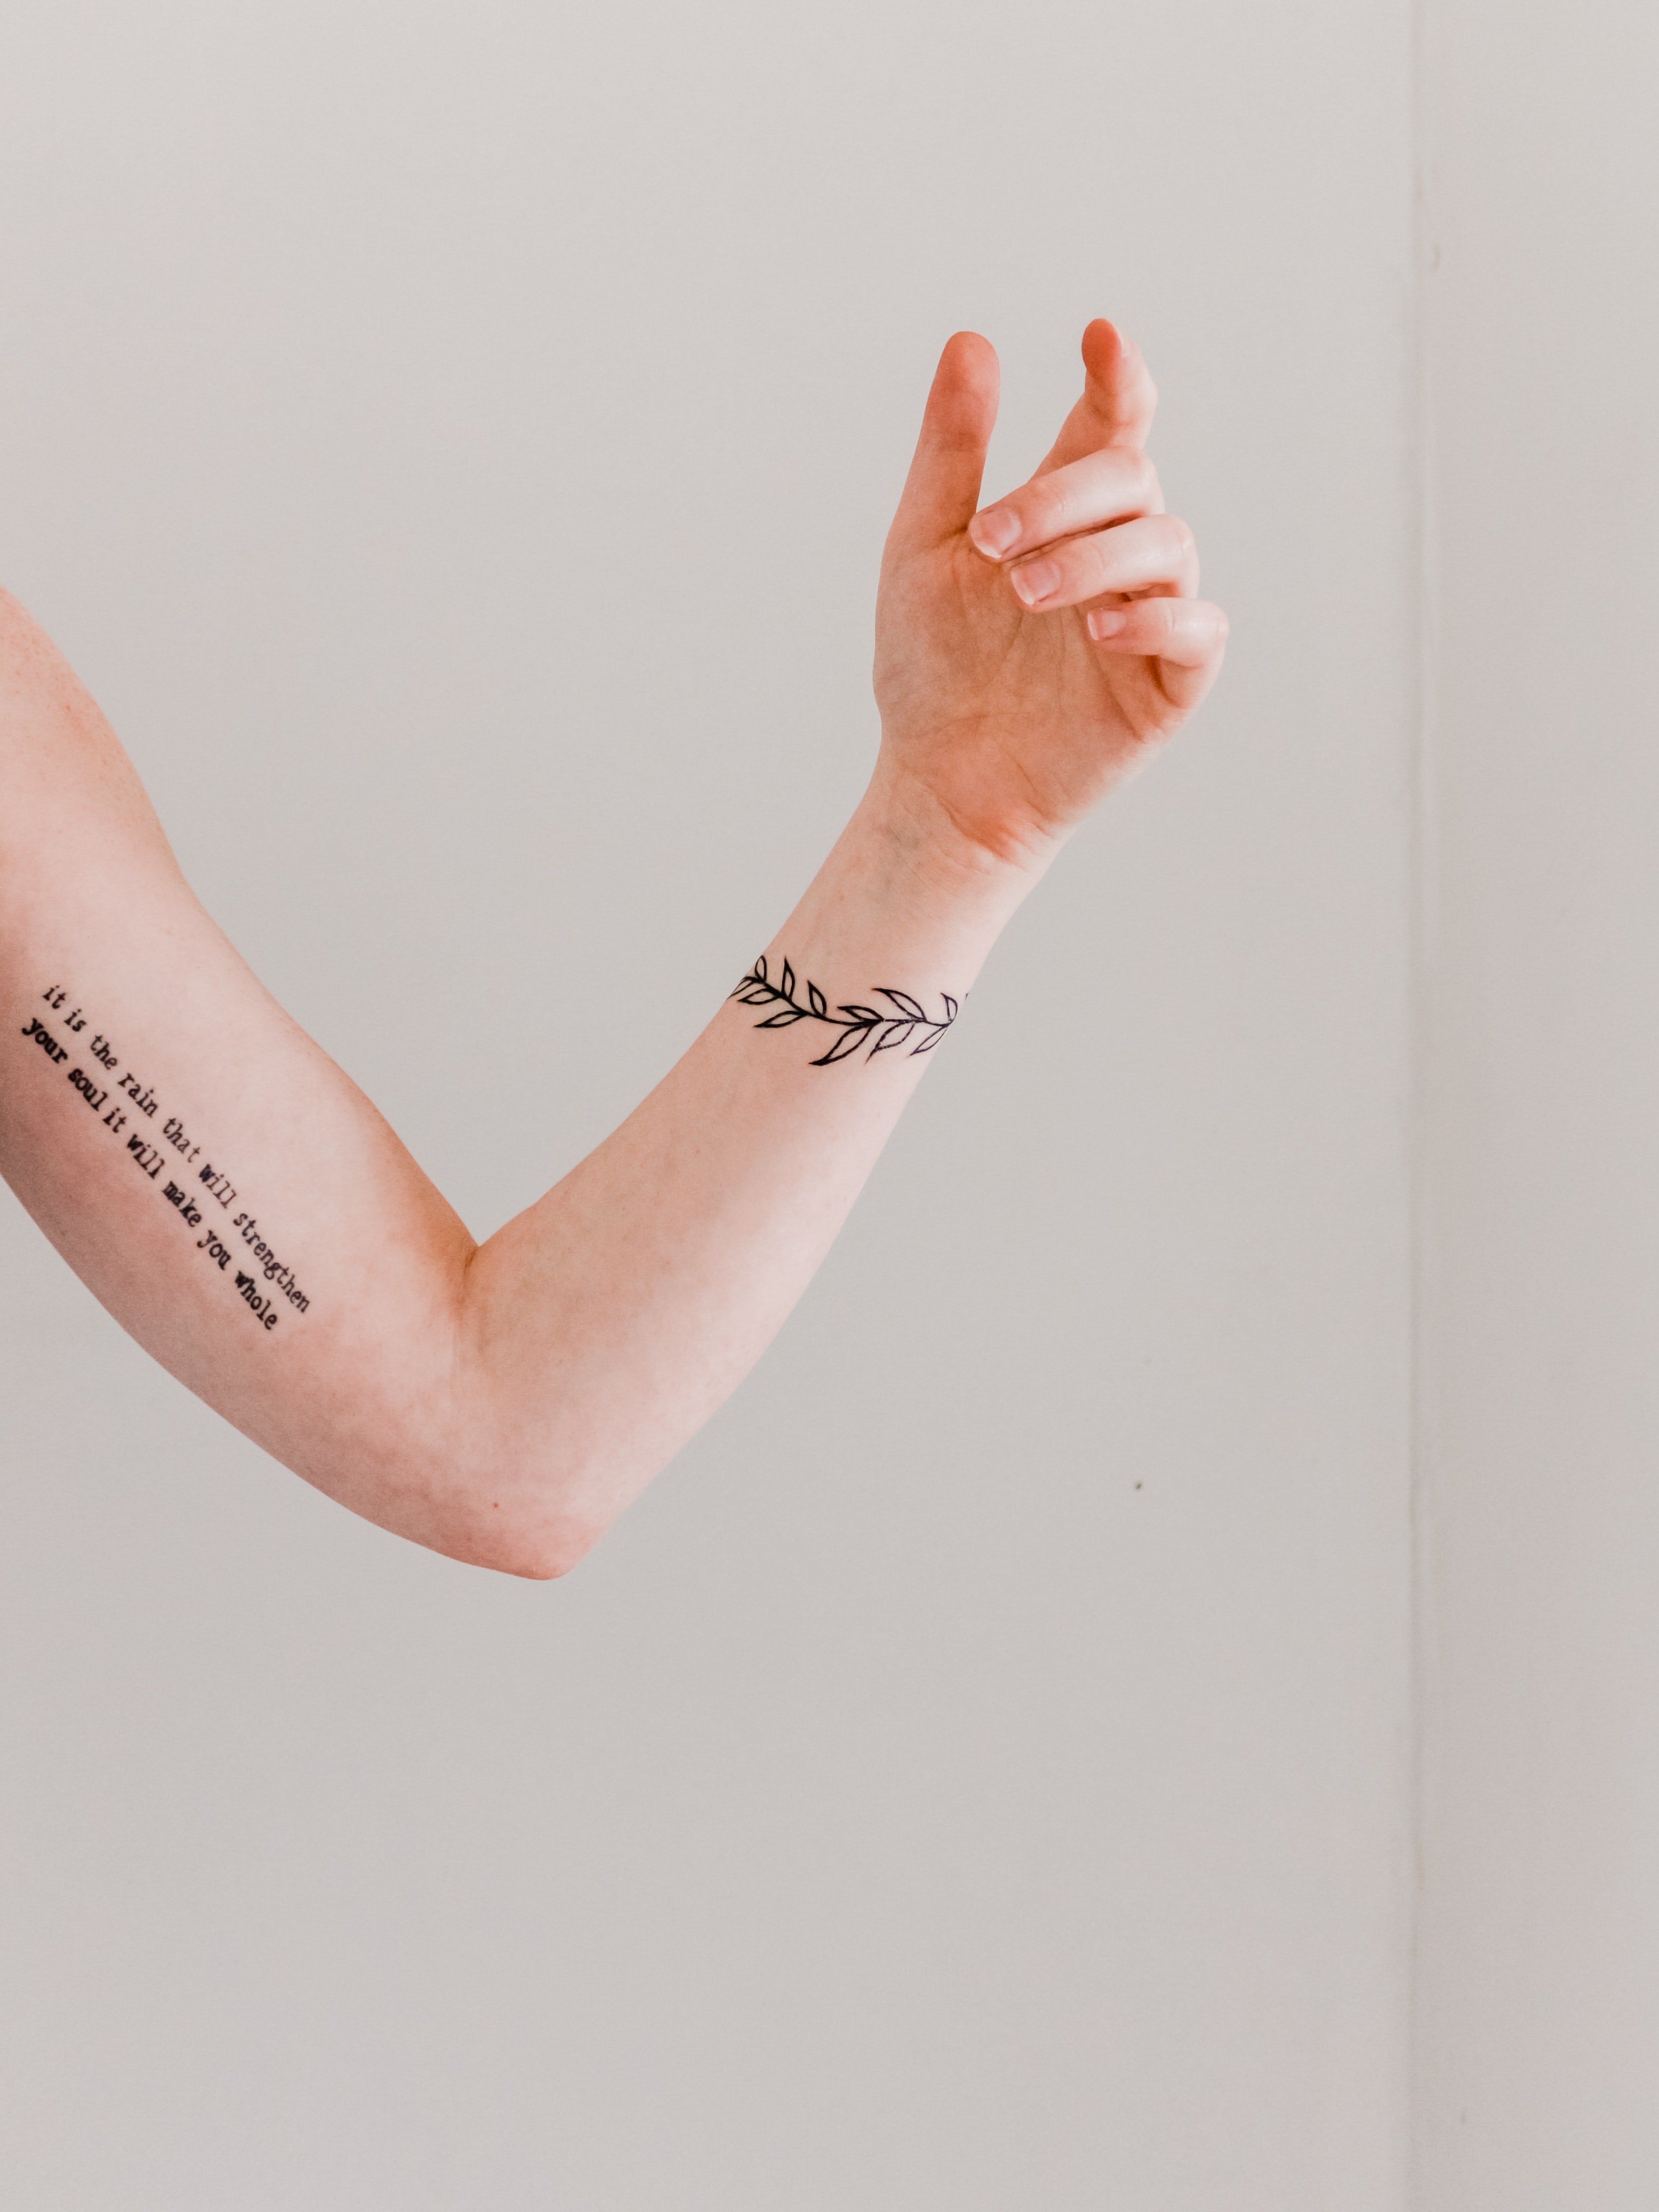 10 Simple Yet Meaningful Tattoo Ideas